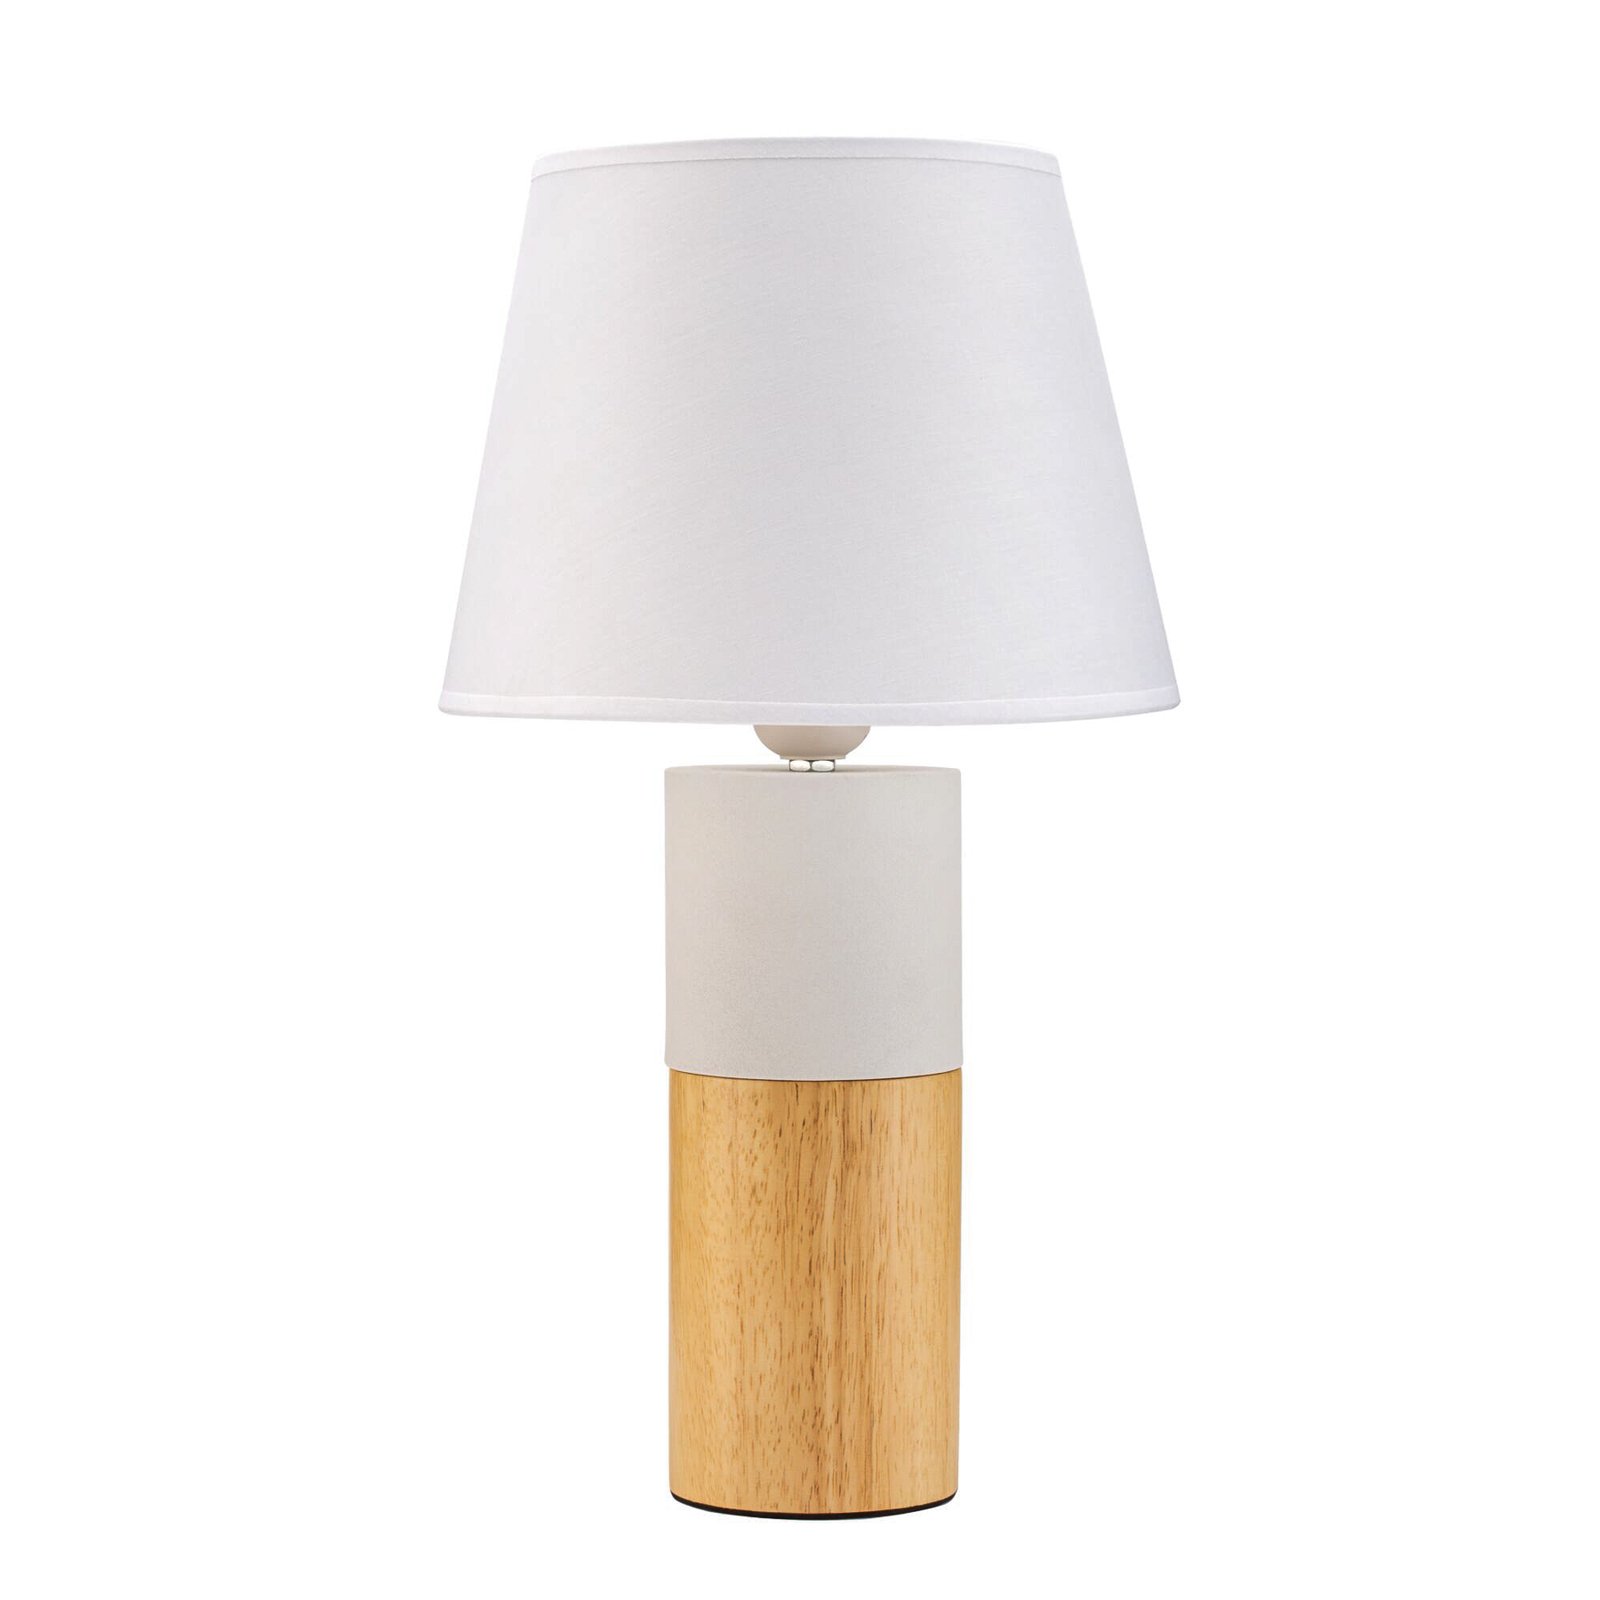 Pauleen Woody Elegance stolová lampa, drevo/textil